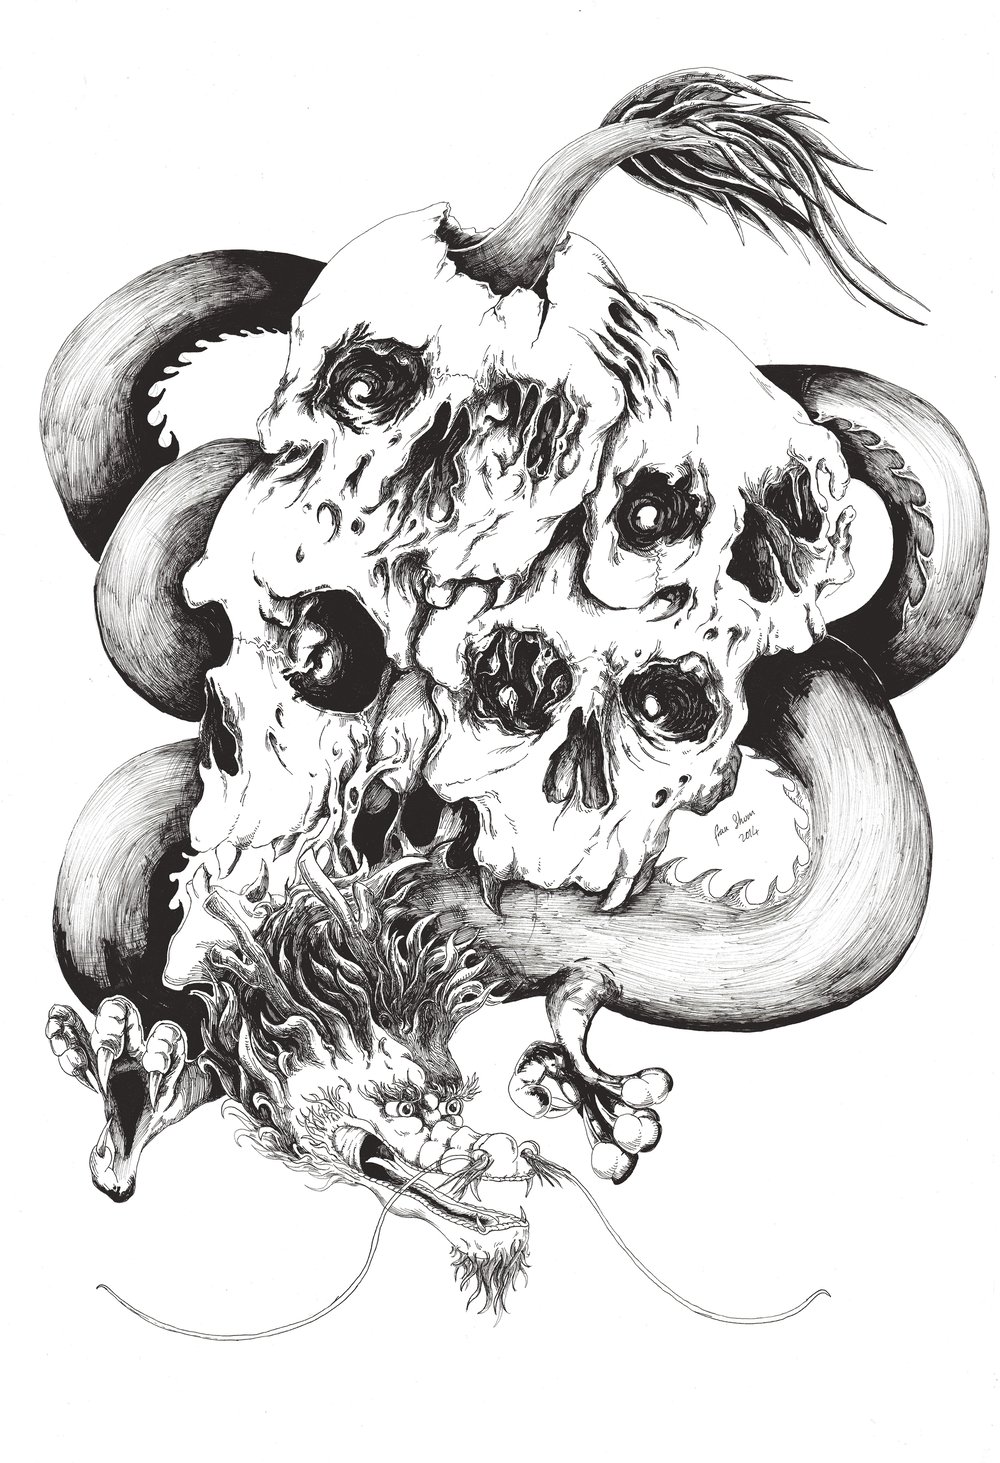 Image of Skulls and Dragon BW A3 Print